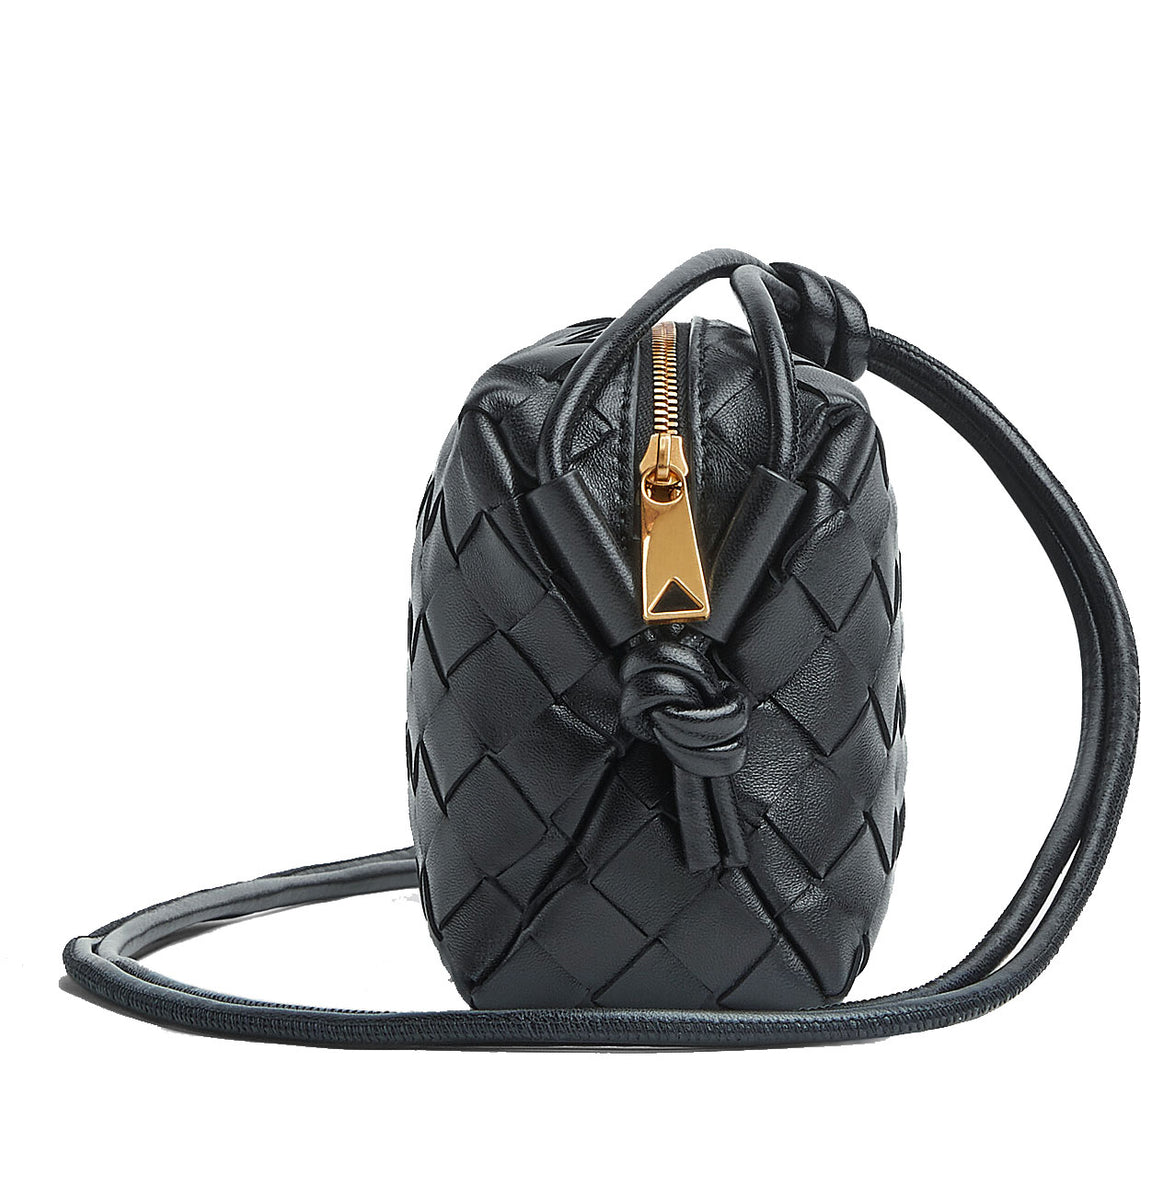 Mini Loop intrecciato leather shoulder bag